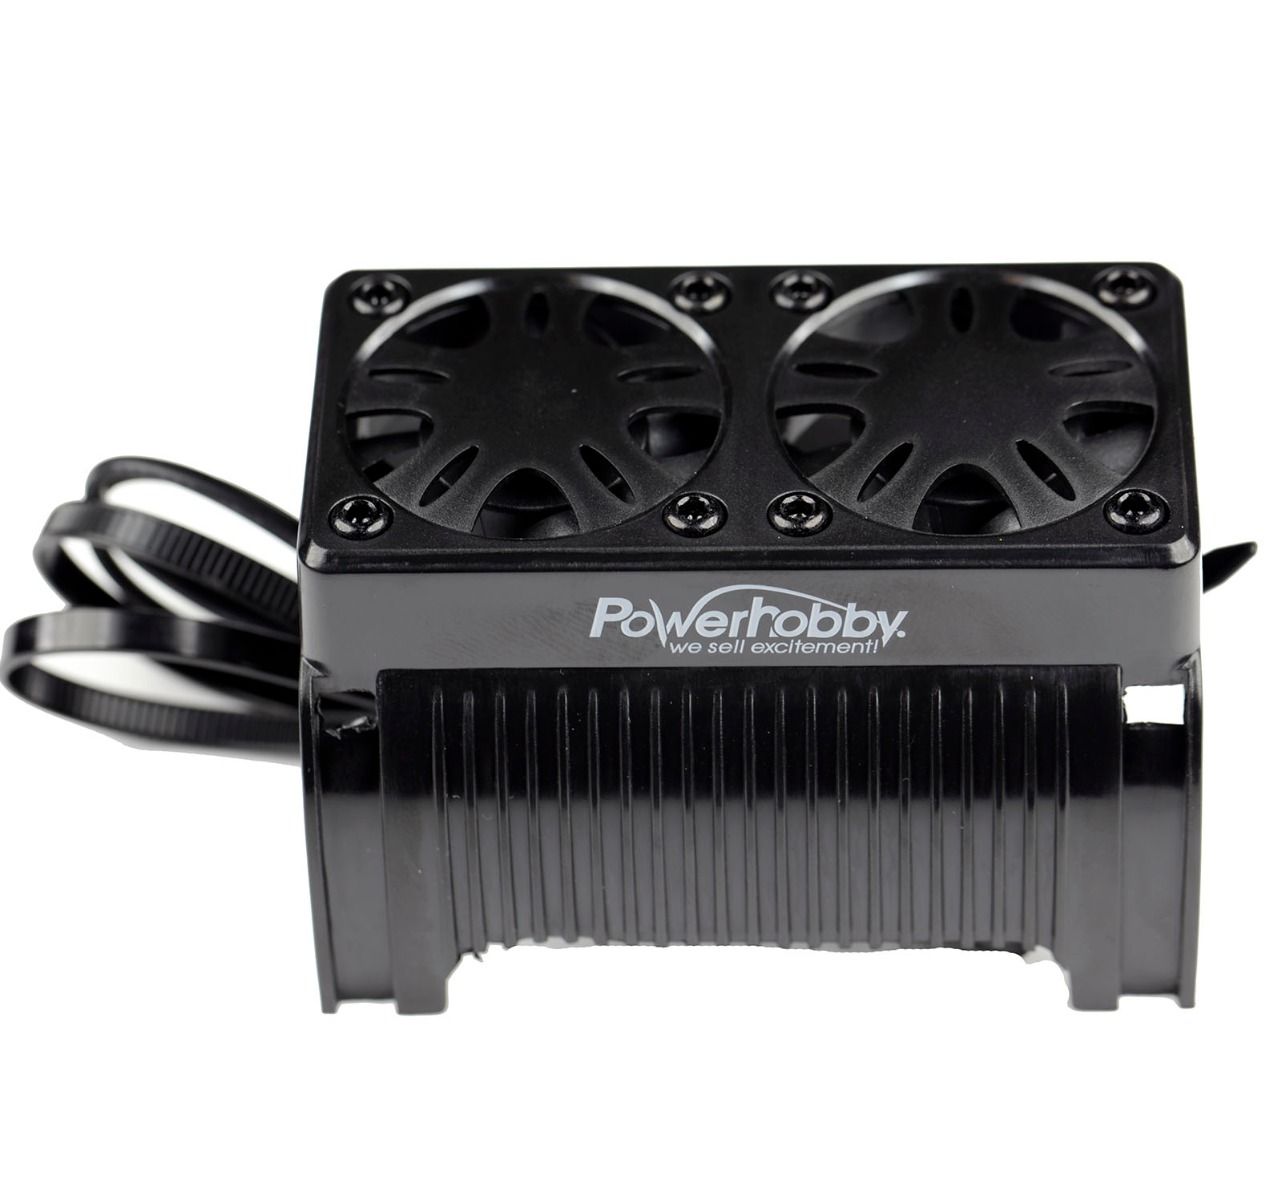 Powerhobby PHF009 1/5 Twin Motor Cooling / Heat Sink Fan with Housing 55mm